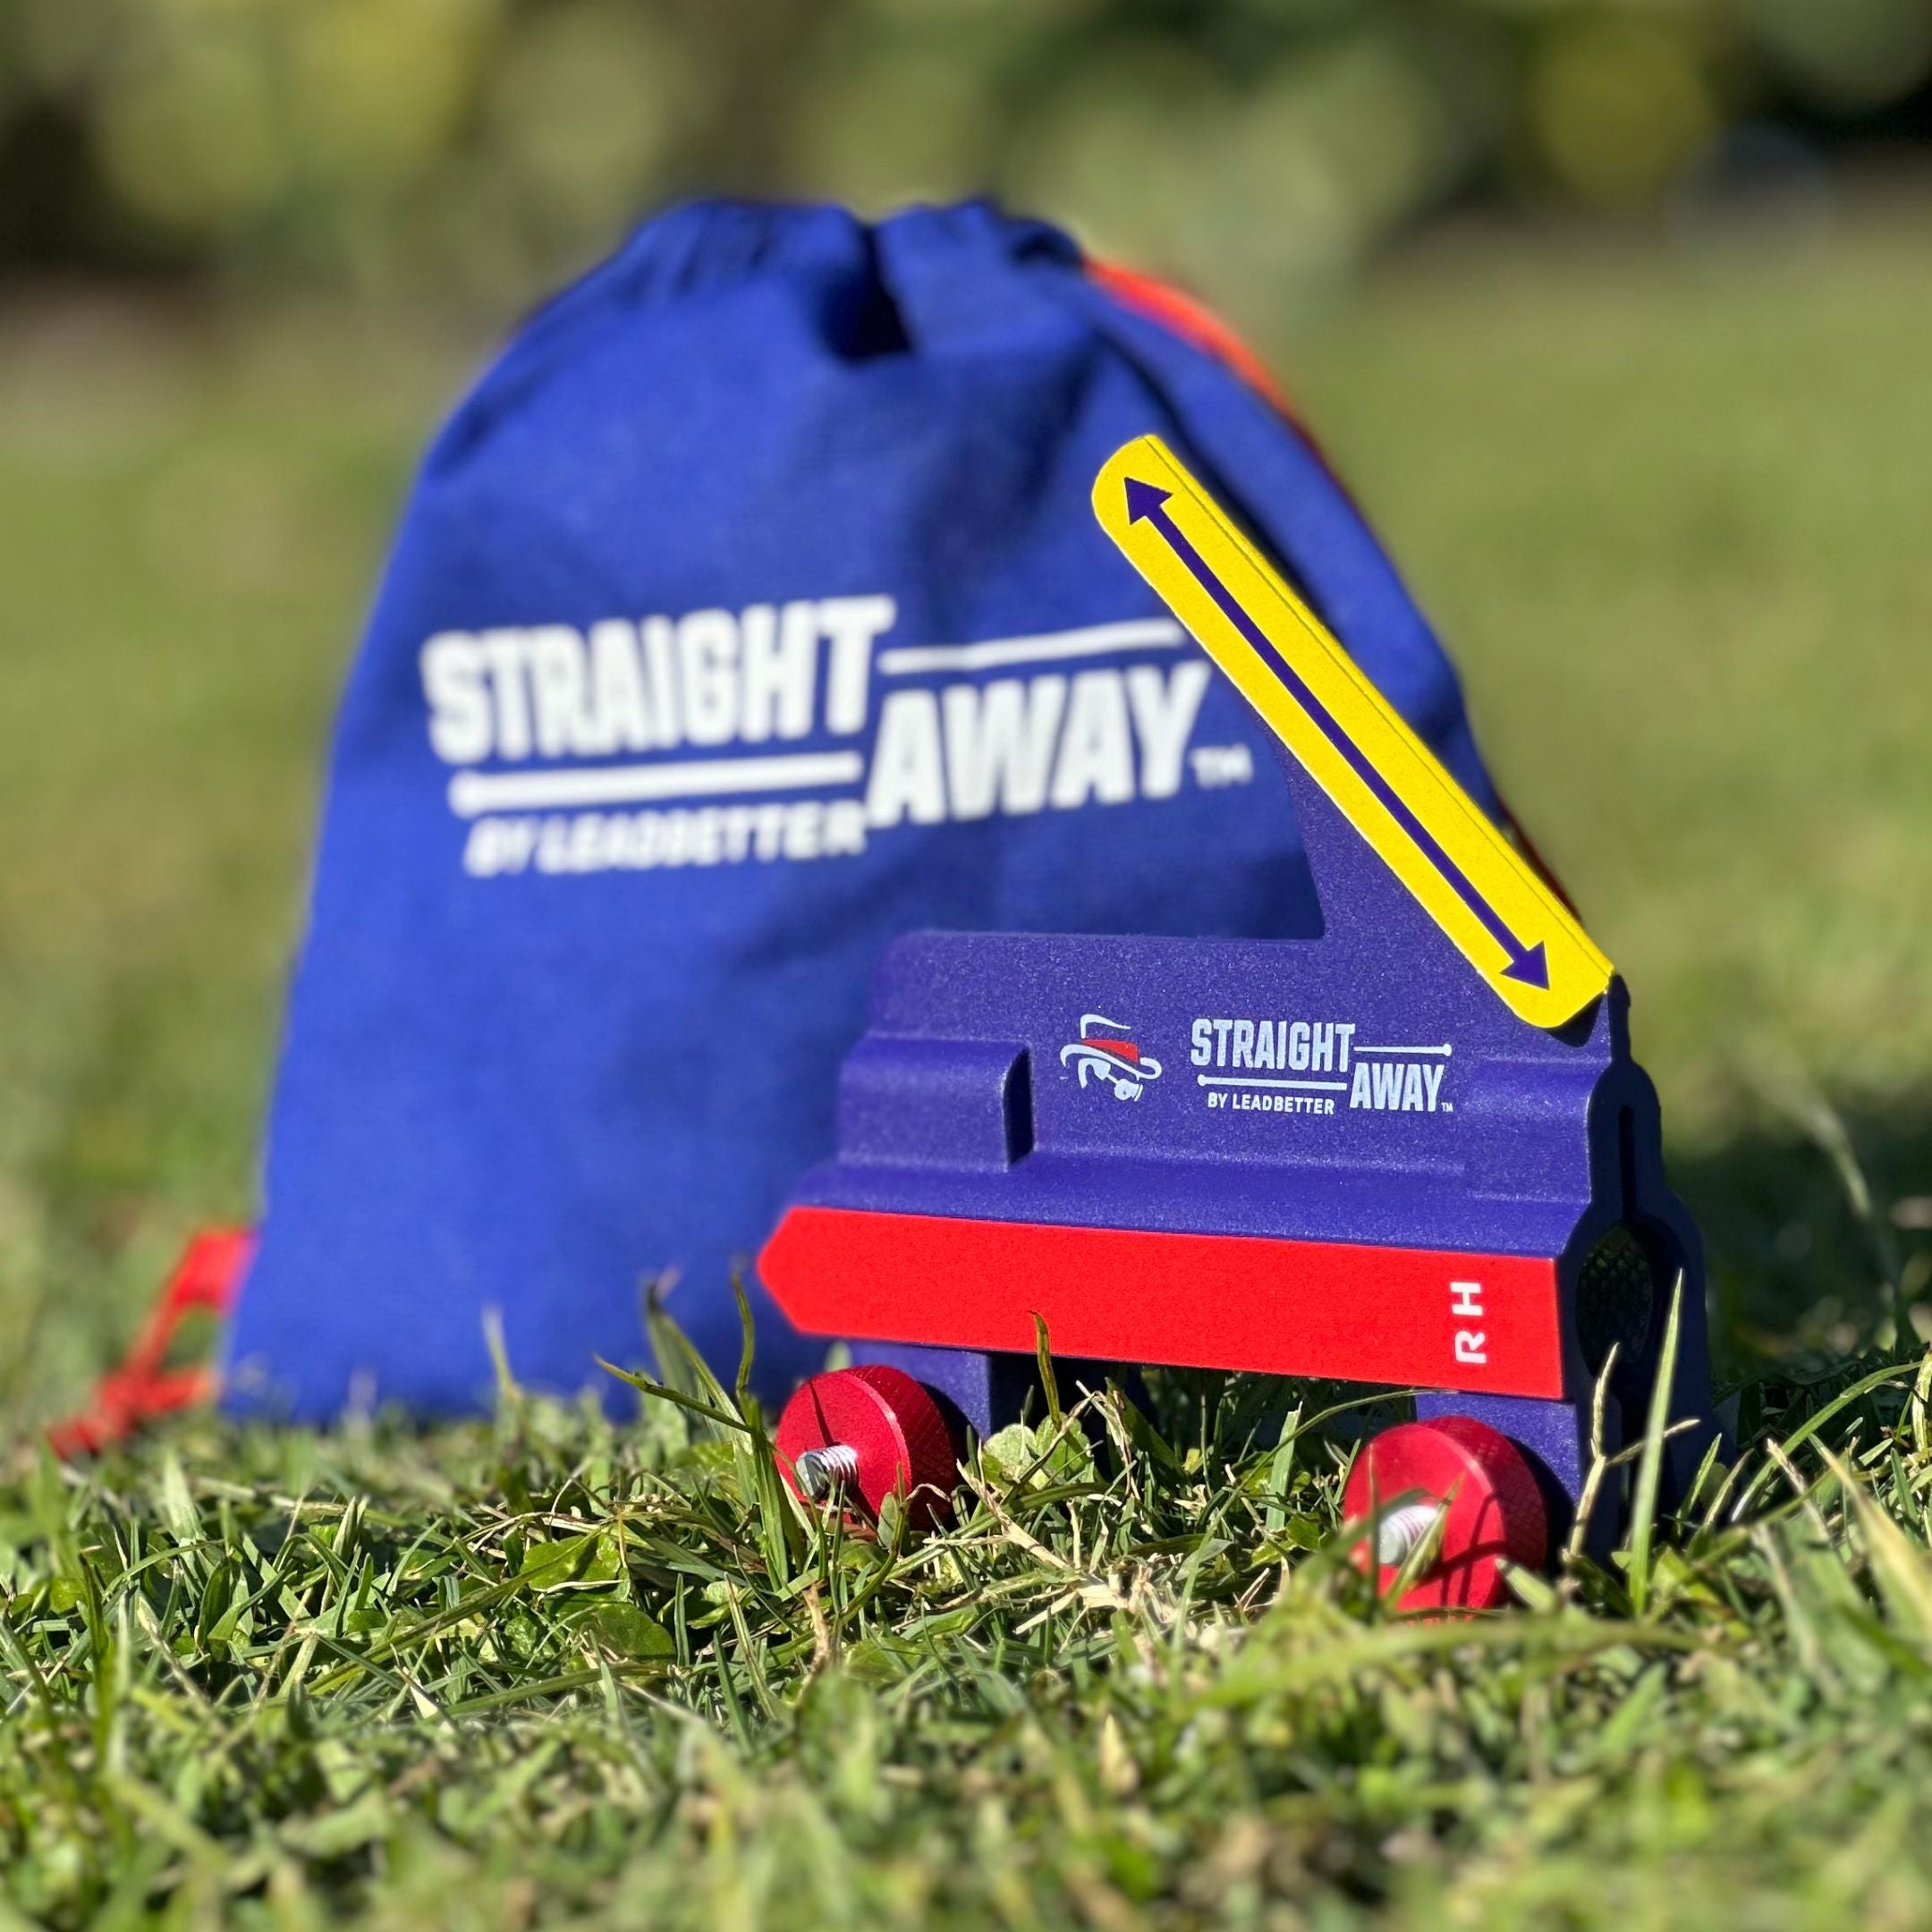 The StraightAway swing aid